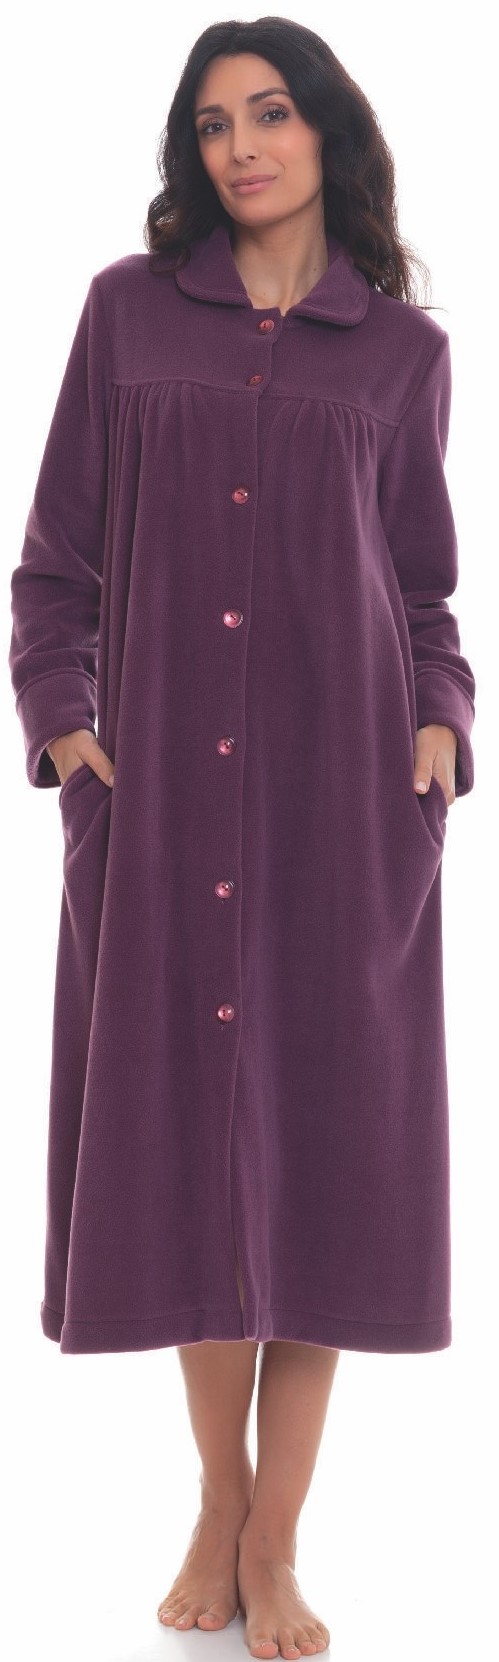 Vestaglia donna invernale abbottonata pile - Fleece buttoned winter woman's  dressing gown